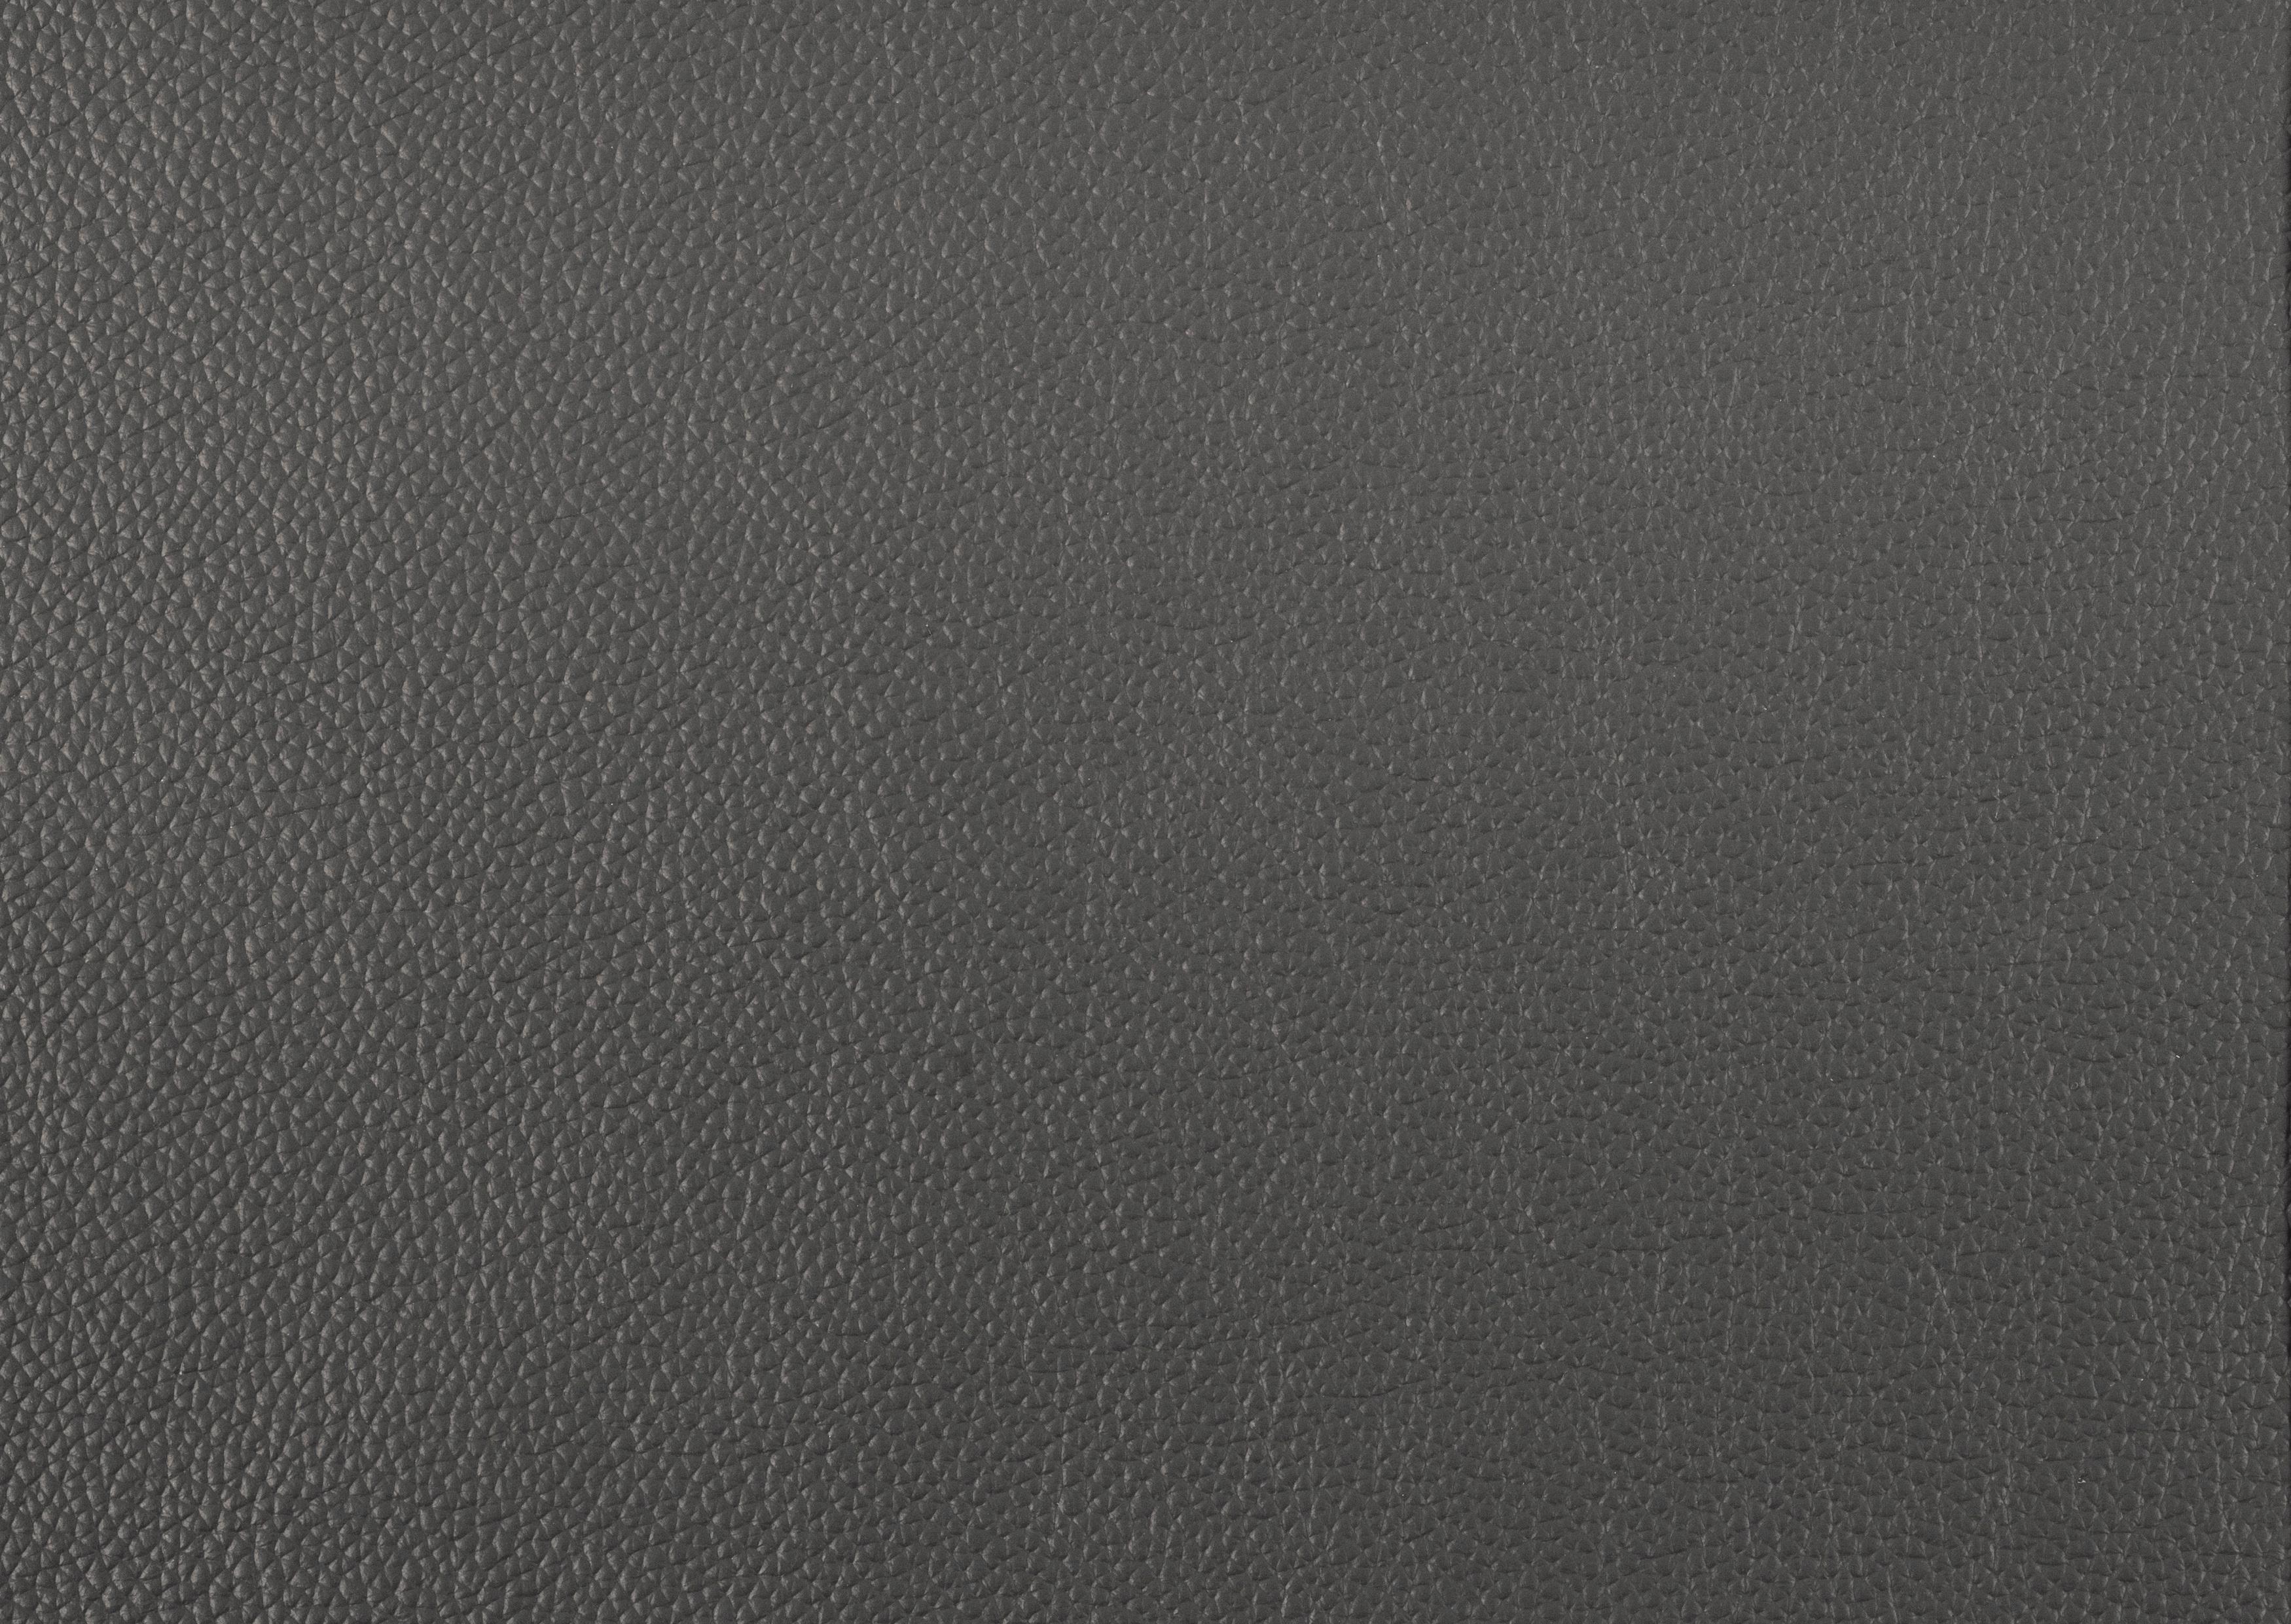 

    
Glam Dark Gray Leather Reclining Sofa Set 3pcs Homelegance 9529DGY Lambent
